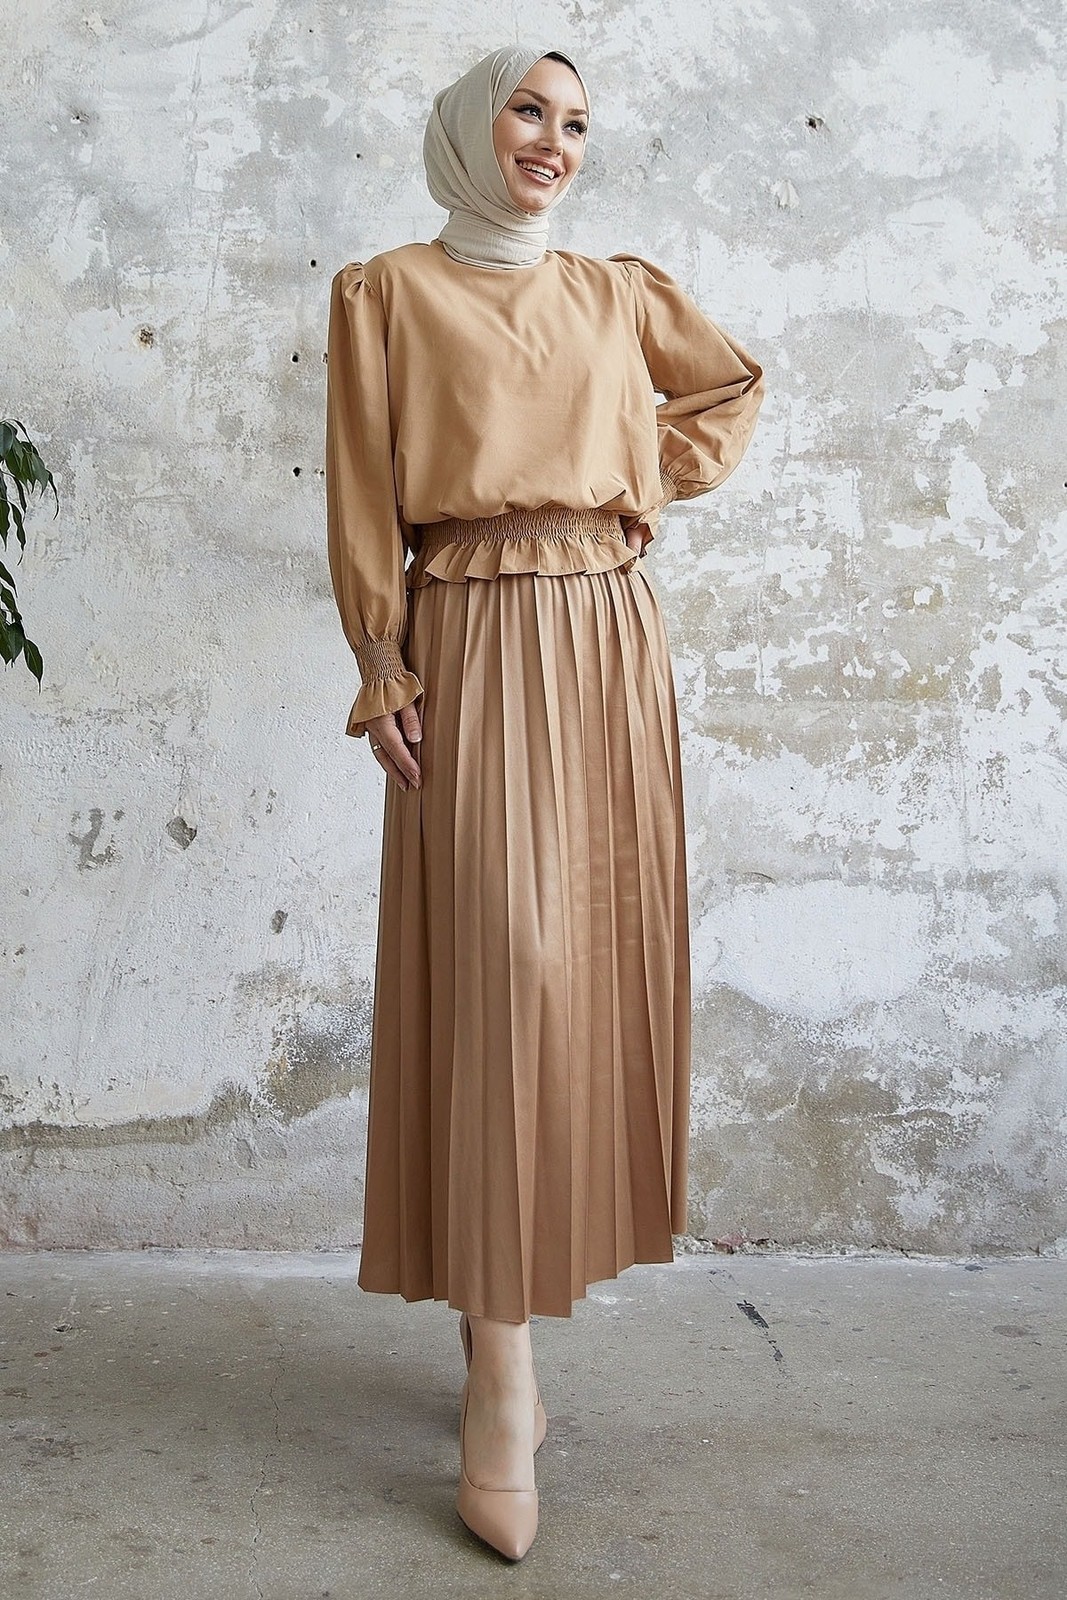 InStyle Alfea Leather Look Skirt - Dark Beige